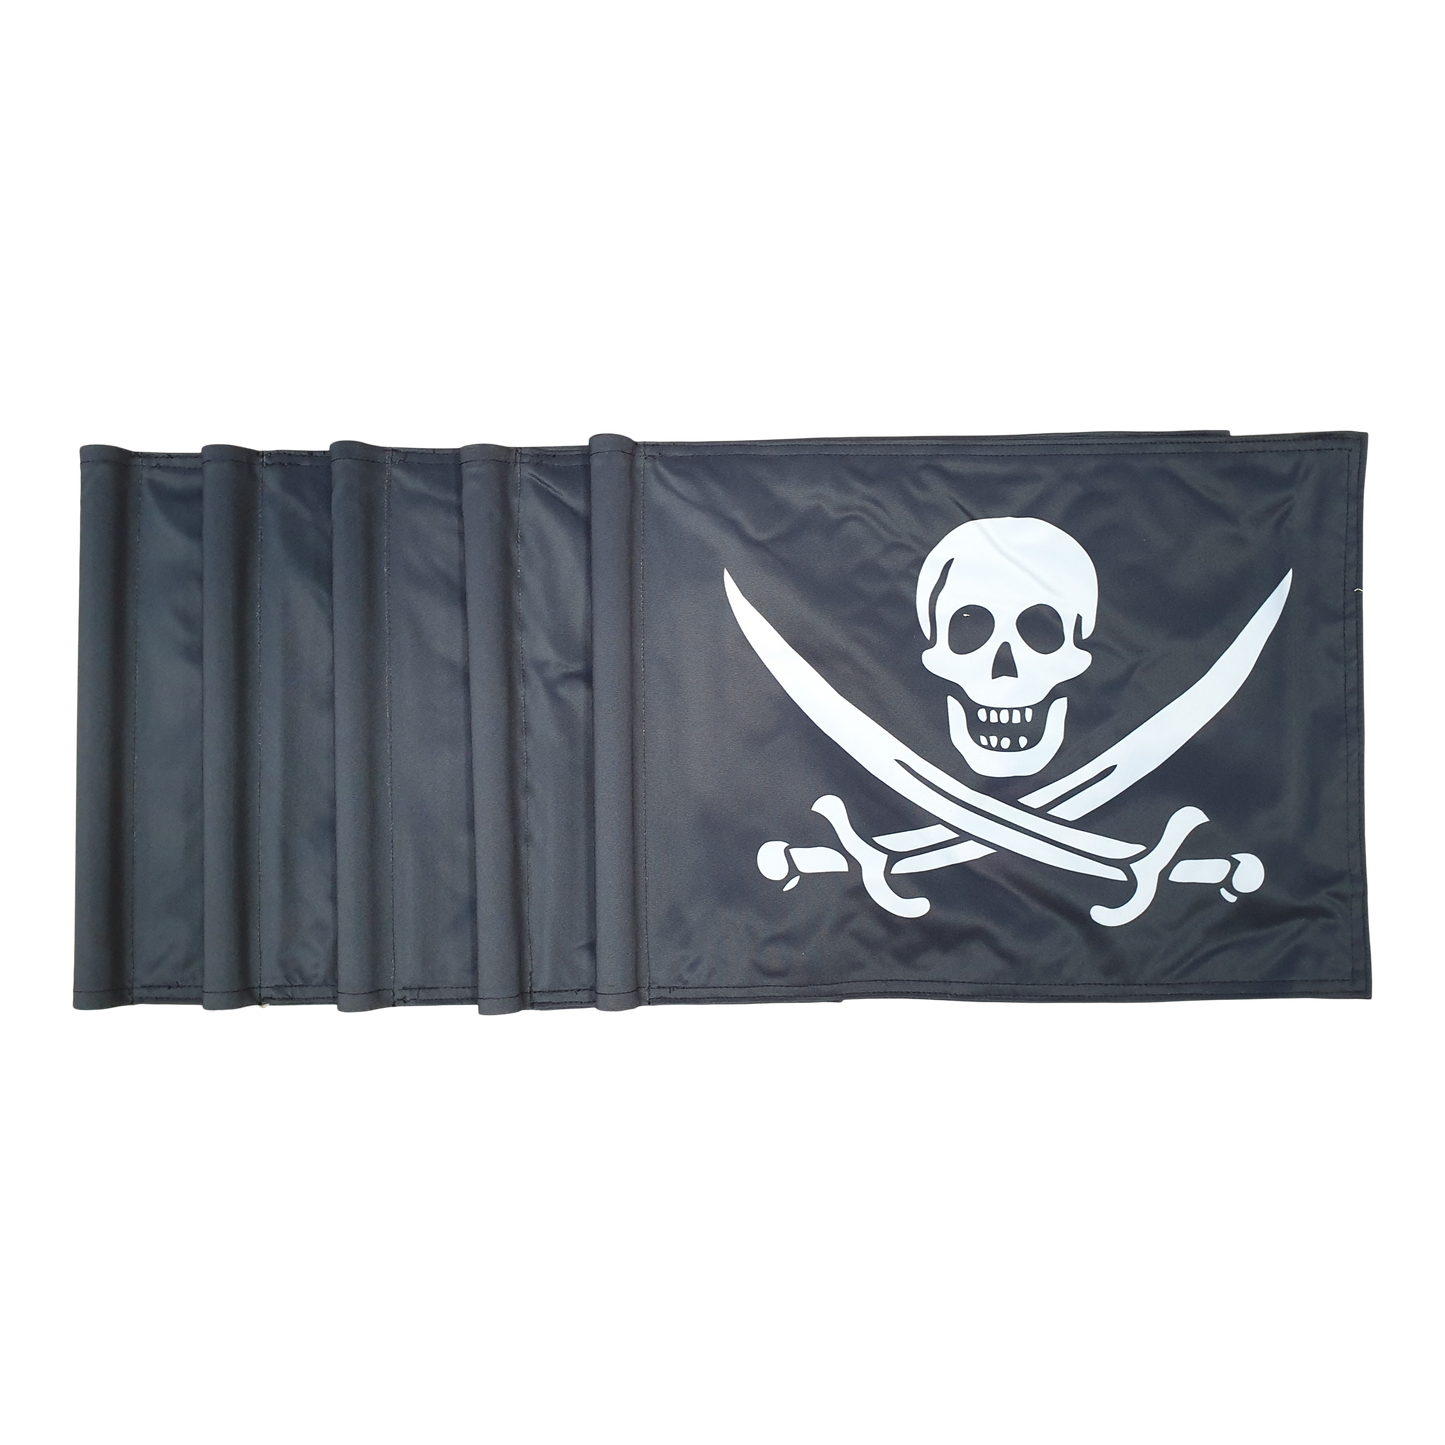 Golfflagg svart med vit pirat logotyp, 200 gram flaggduk